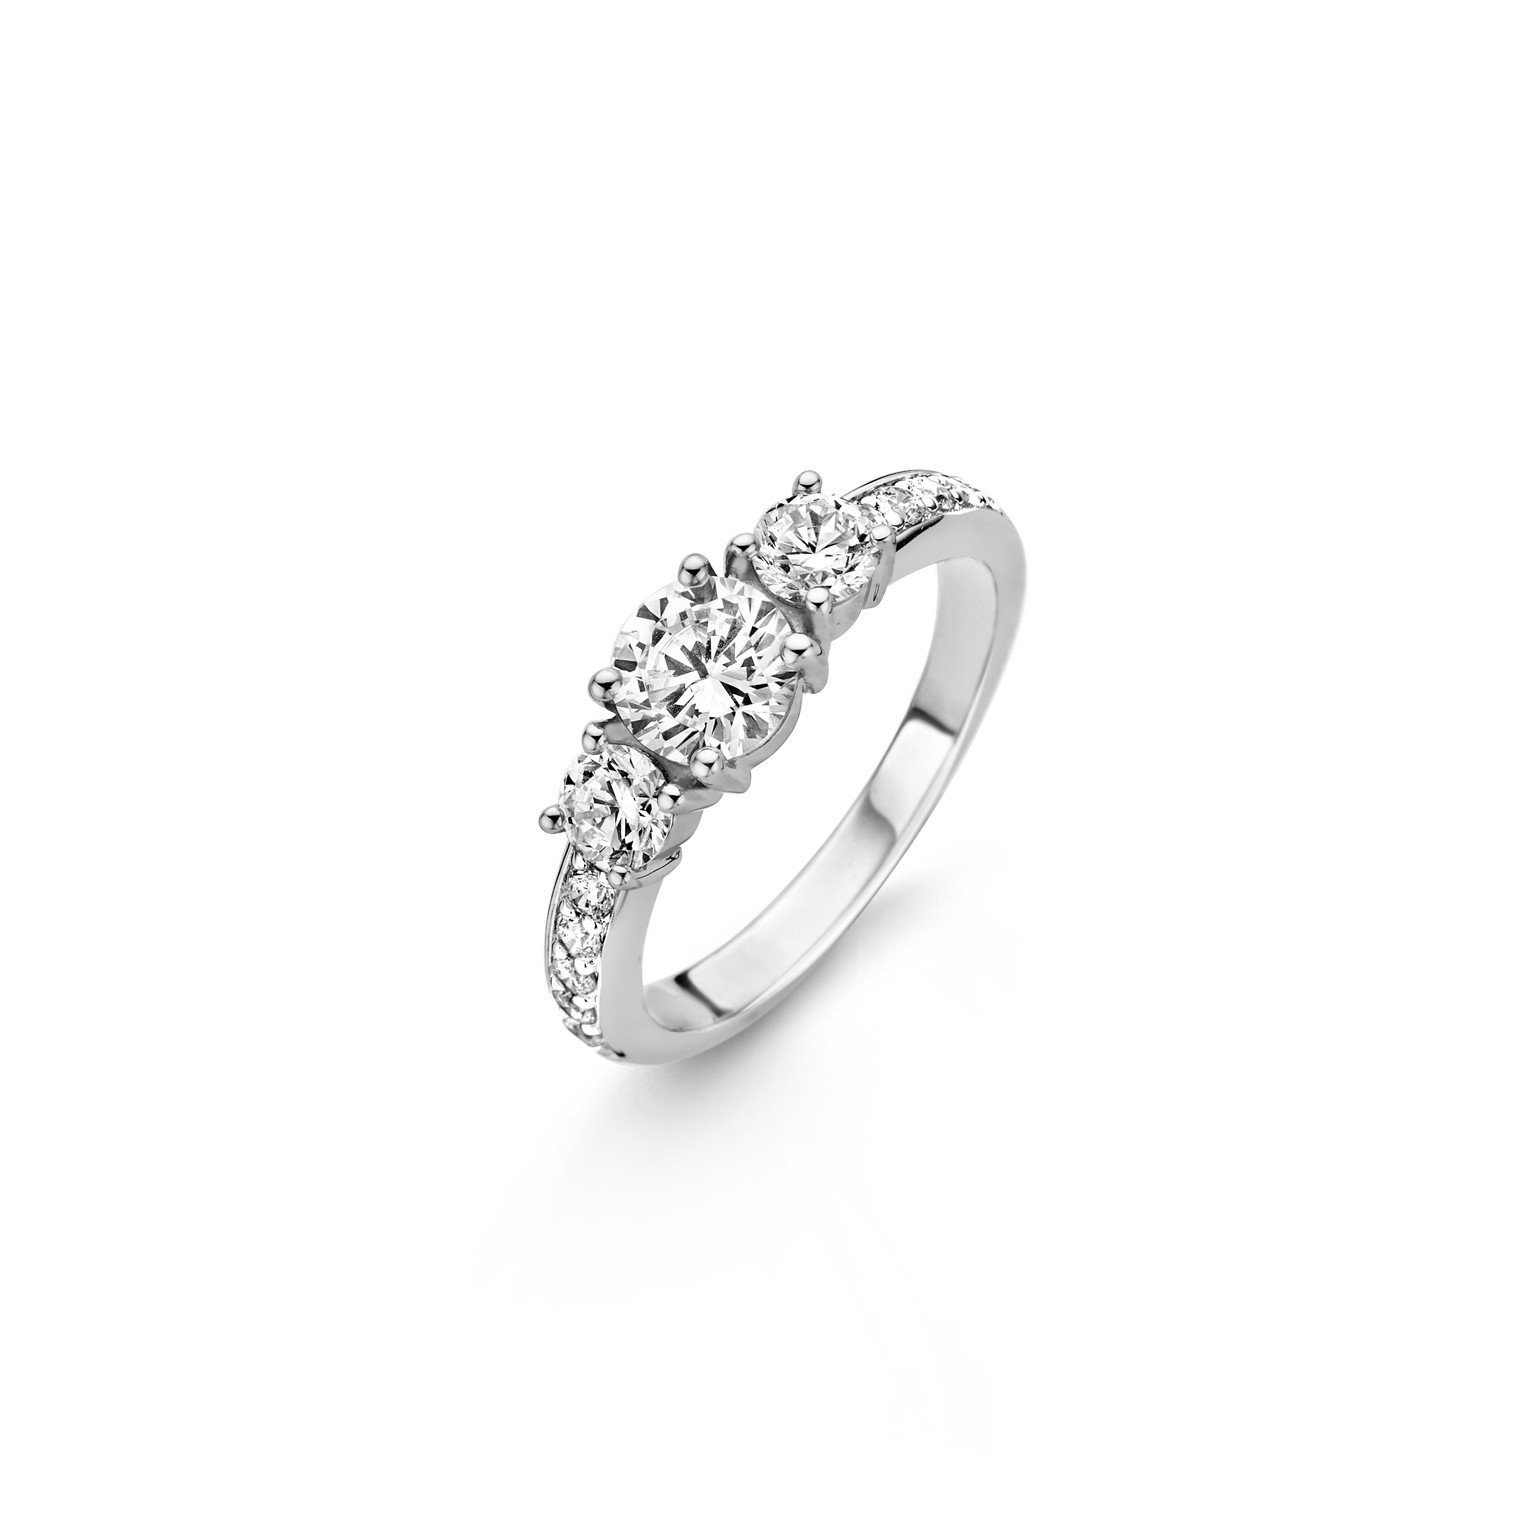 TI SENTO - Milano Ring 12044ZI Gala Jewelers Inc. White Oak, PA